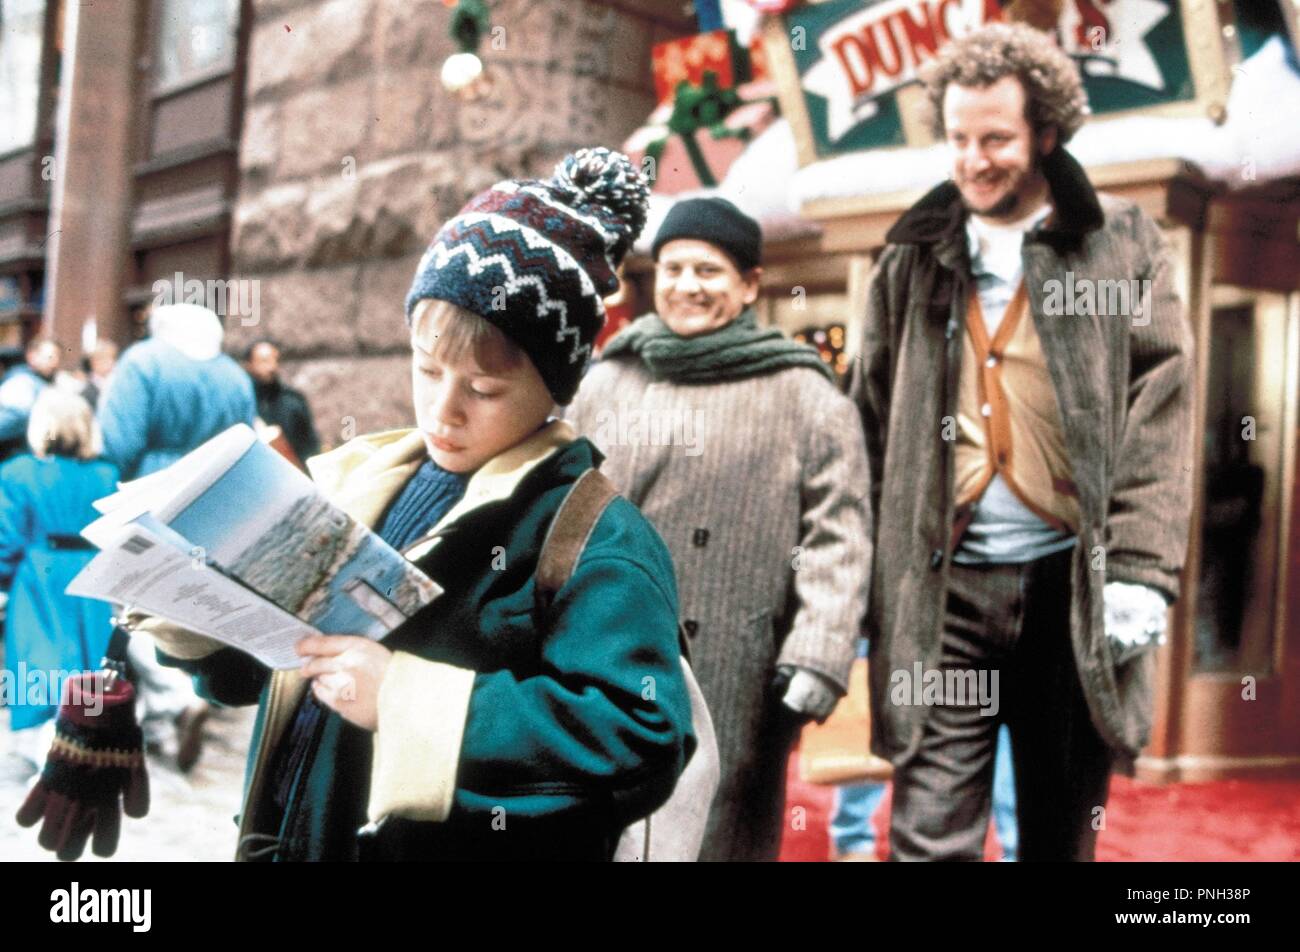 Original film title: HOME ALONE 2: LOST IN NEW YORK. English title: HOME ALONE 2: LOST IN NEW YORK. Year: 1992. Director: CHRIS COLUMBUS. Stars: MACAULAY CULKIN; JOE PESCI; DANIEL STERN. Credit: 20TH CENTURY FOX / Album Stock Photo